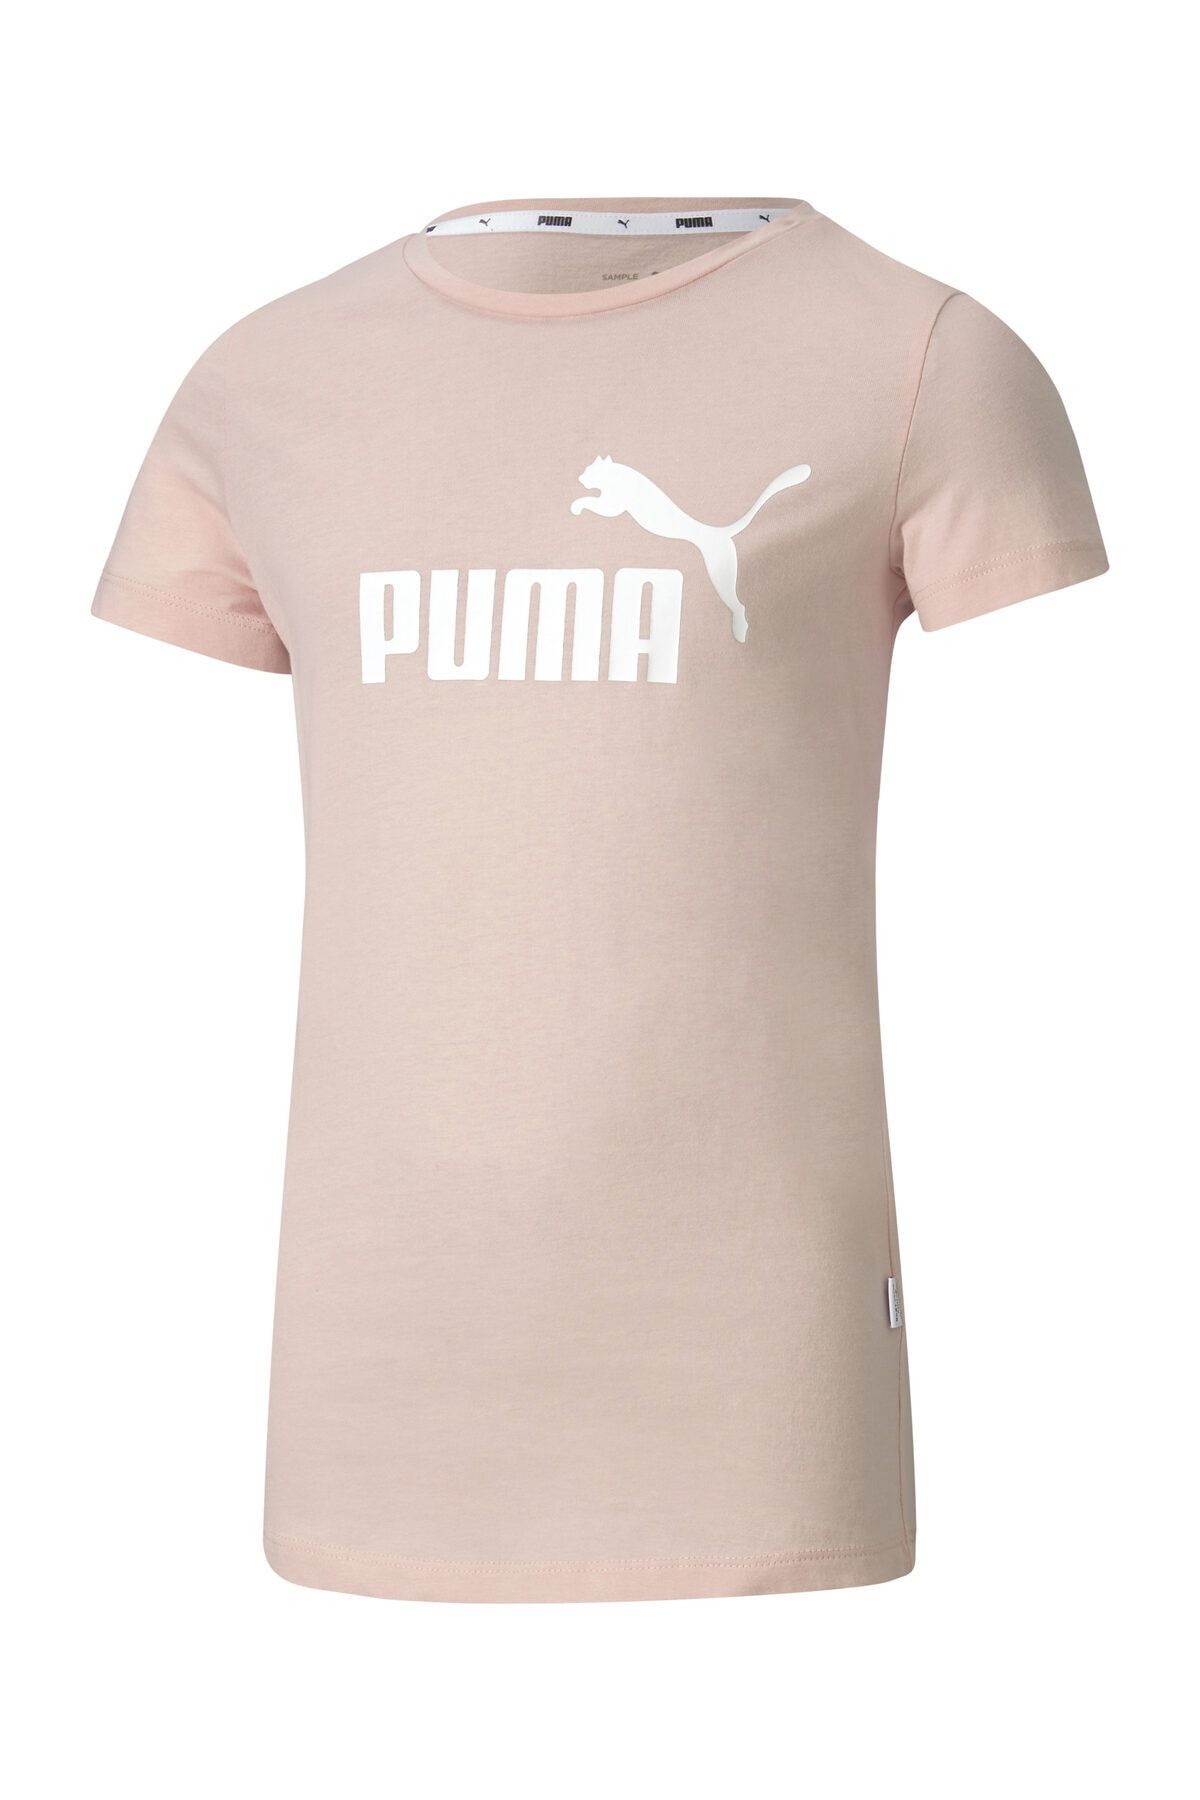 Puma Baskılı Pembe Kız Çocuk T-Shirt